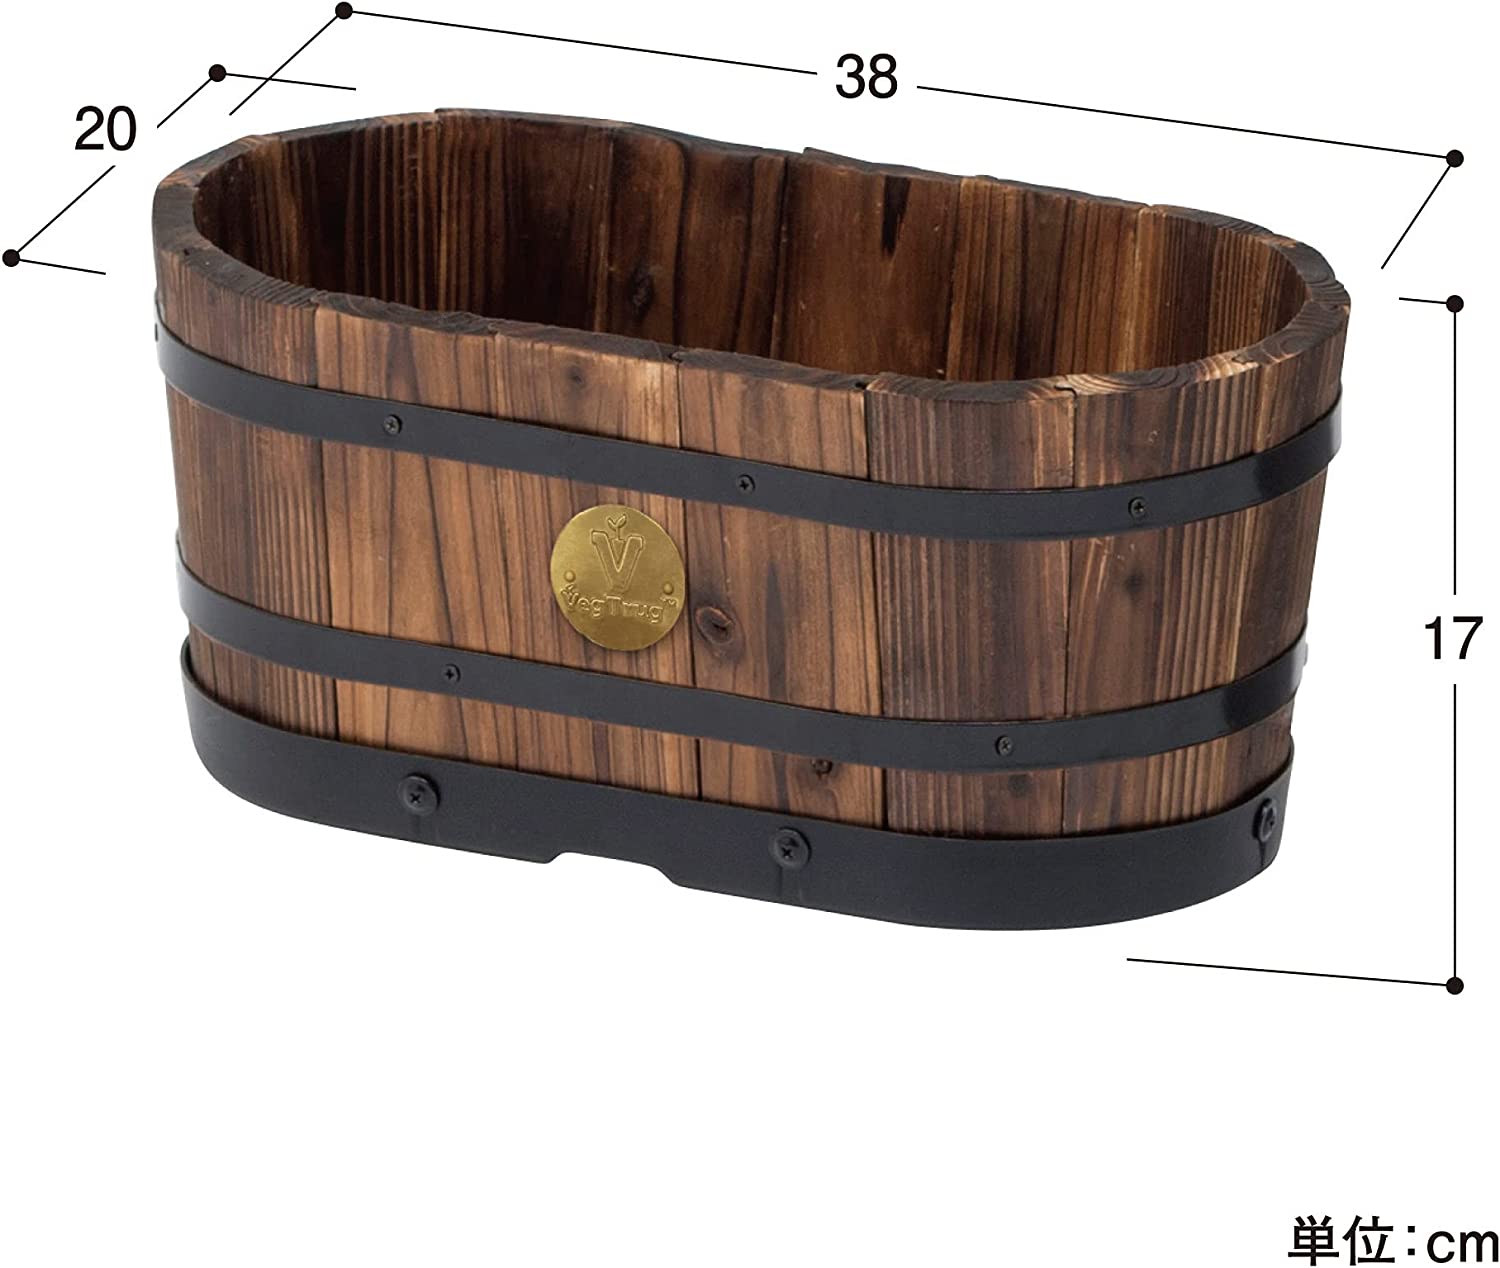 Oval Wooden Planter Barrel